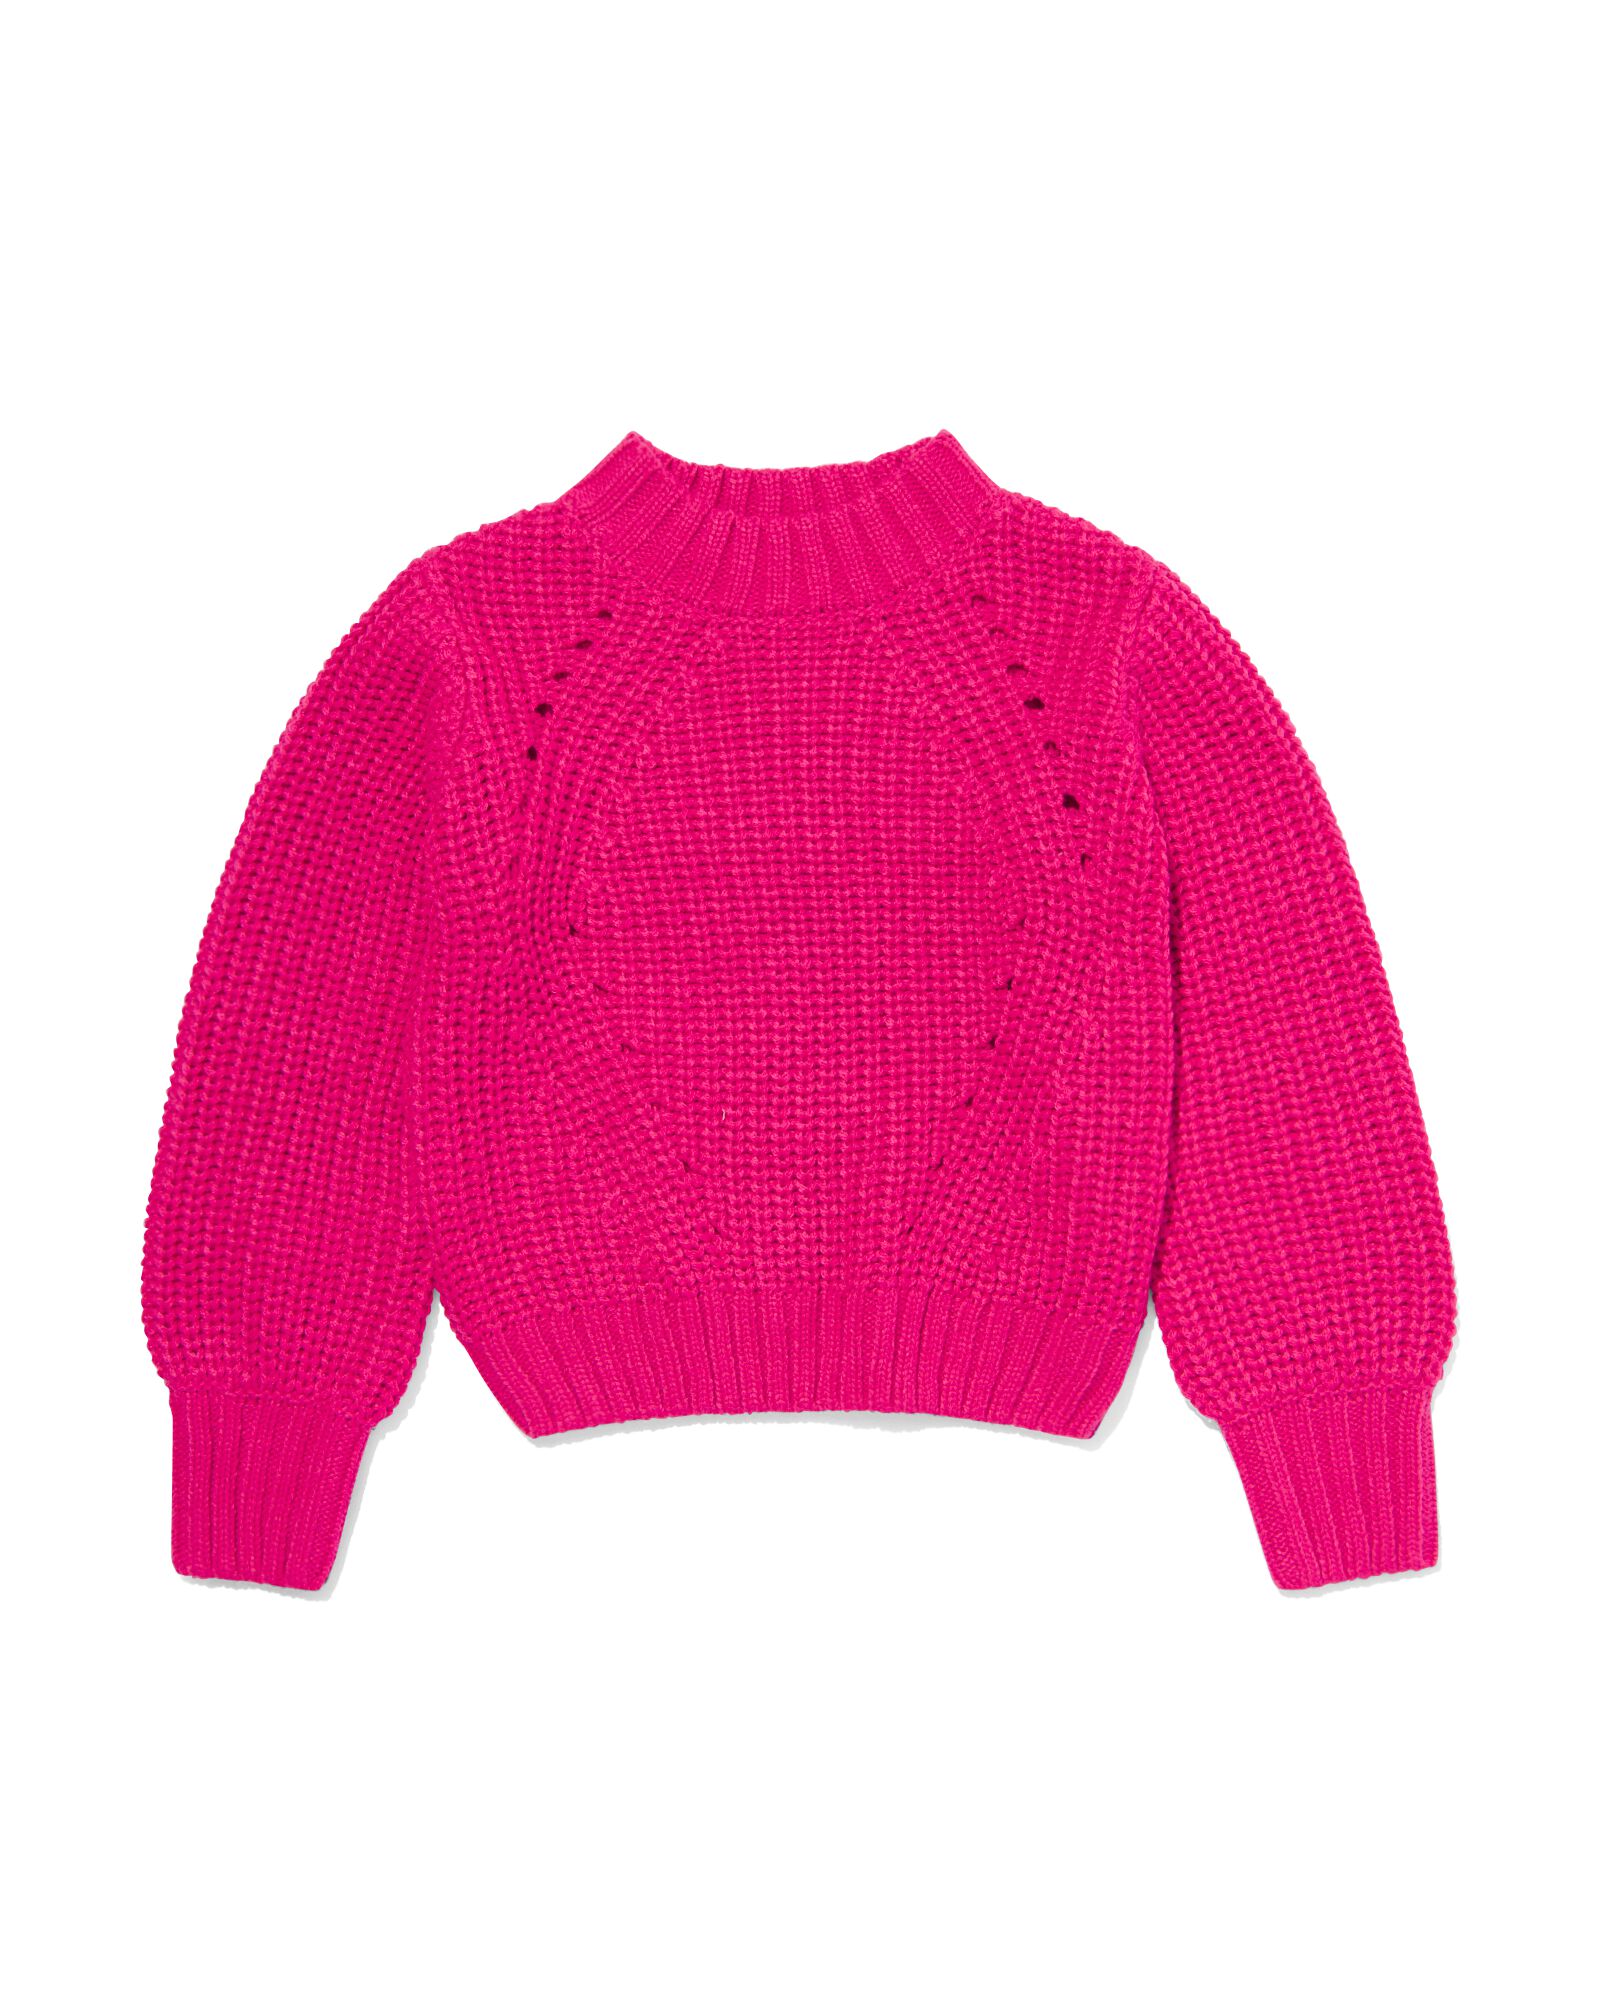 kinder trui ajour gebreid roze roze - 30824202PINK - HEMA